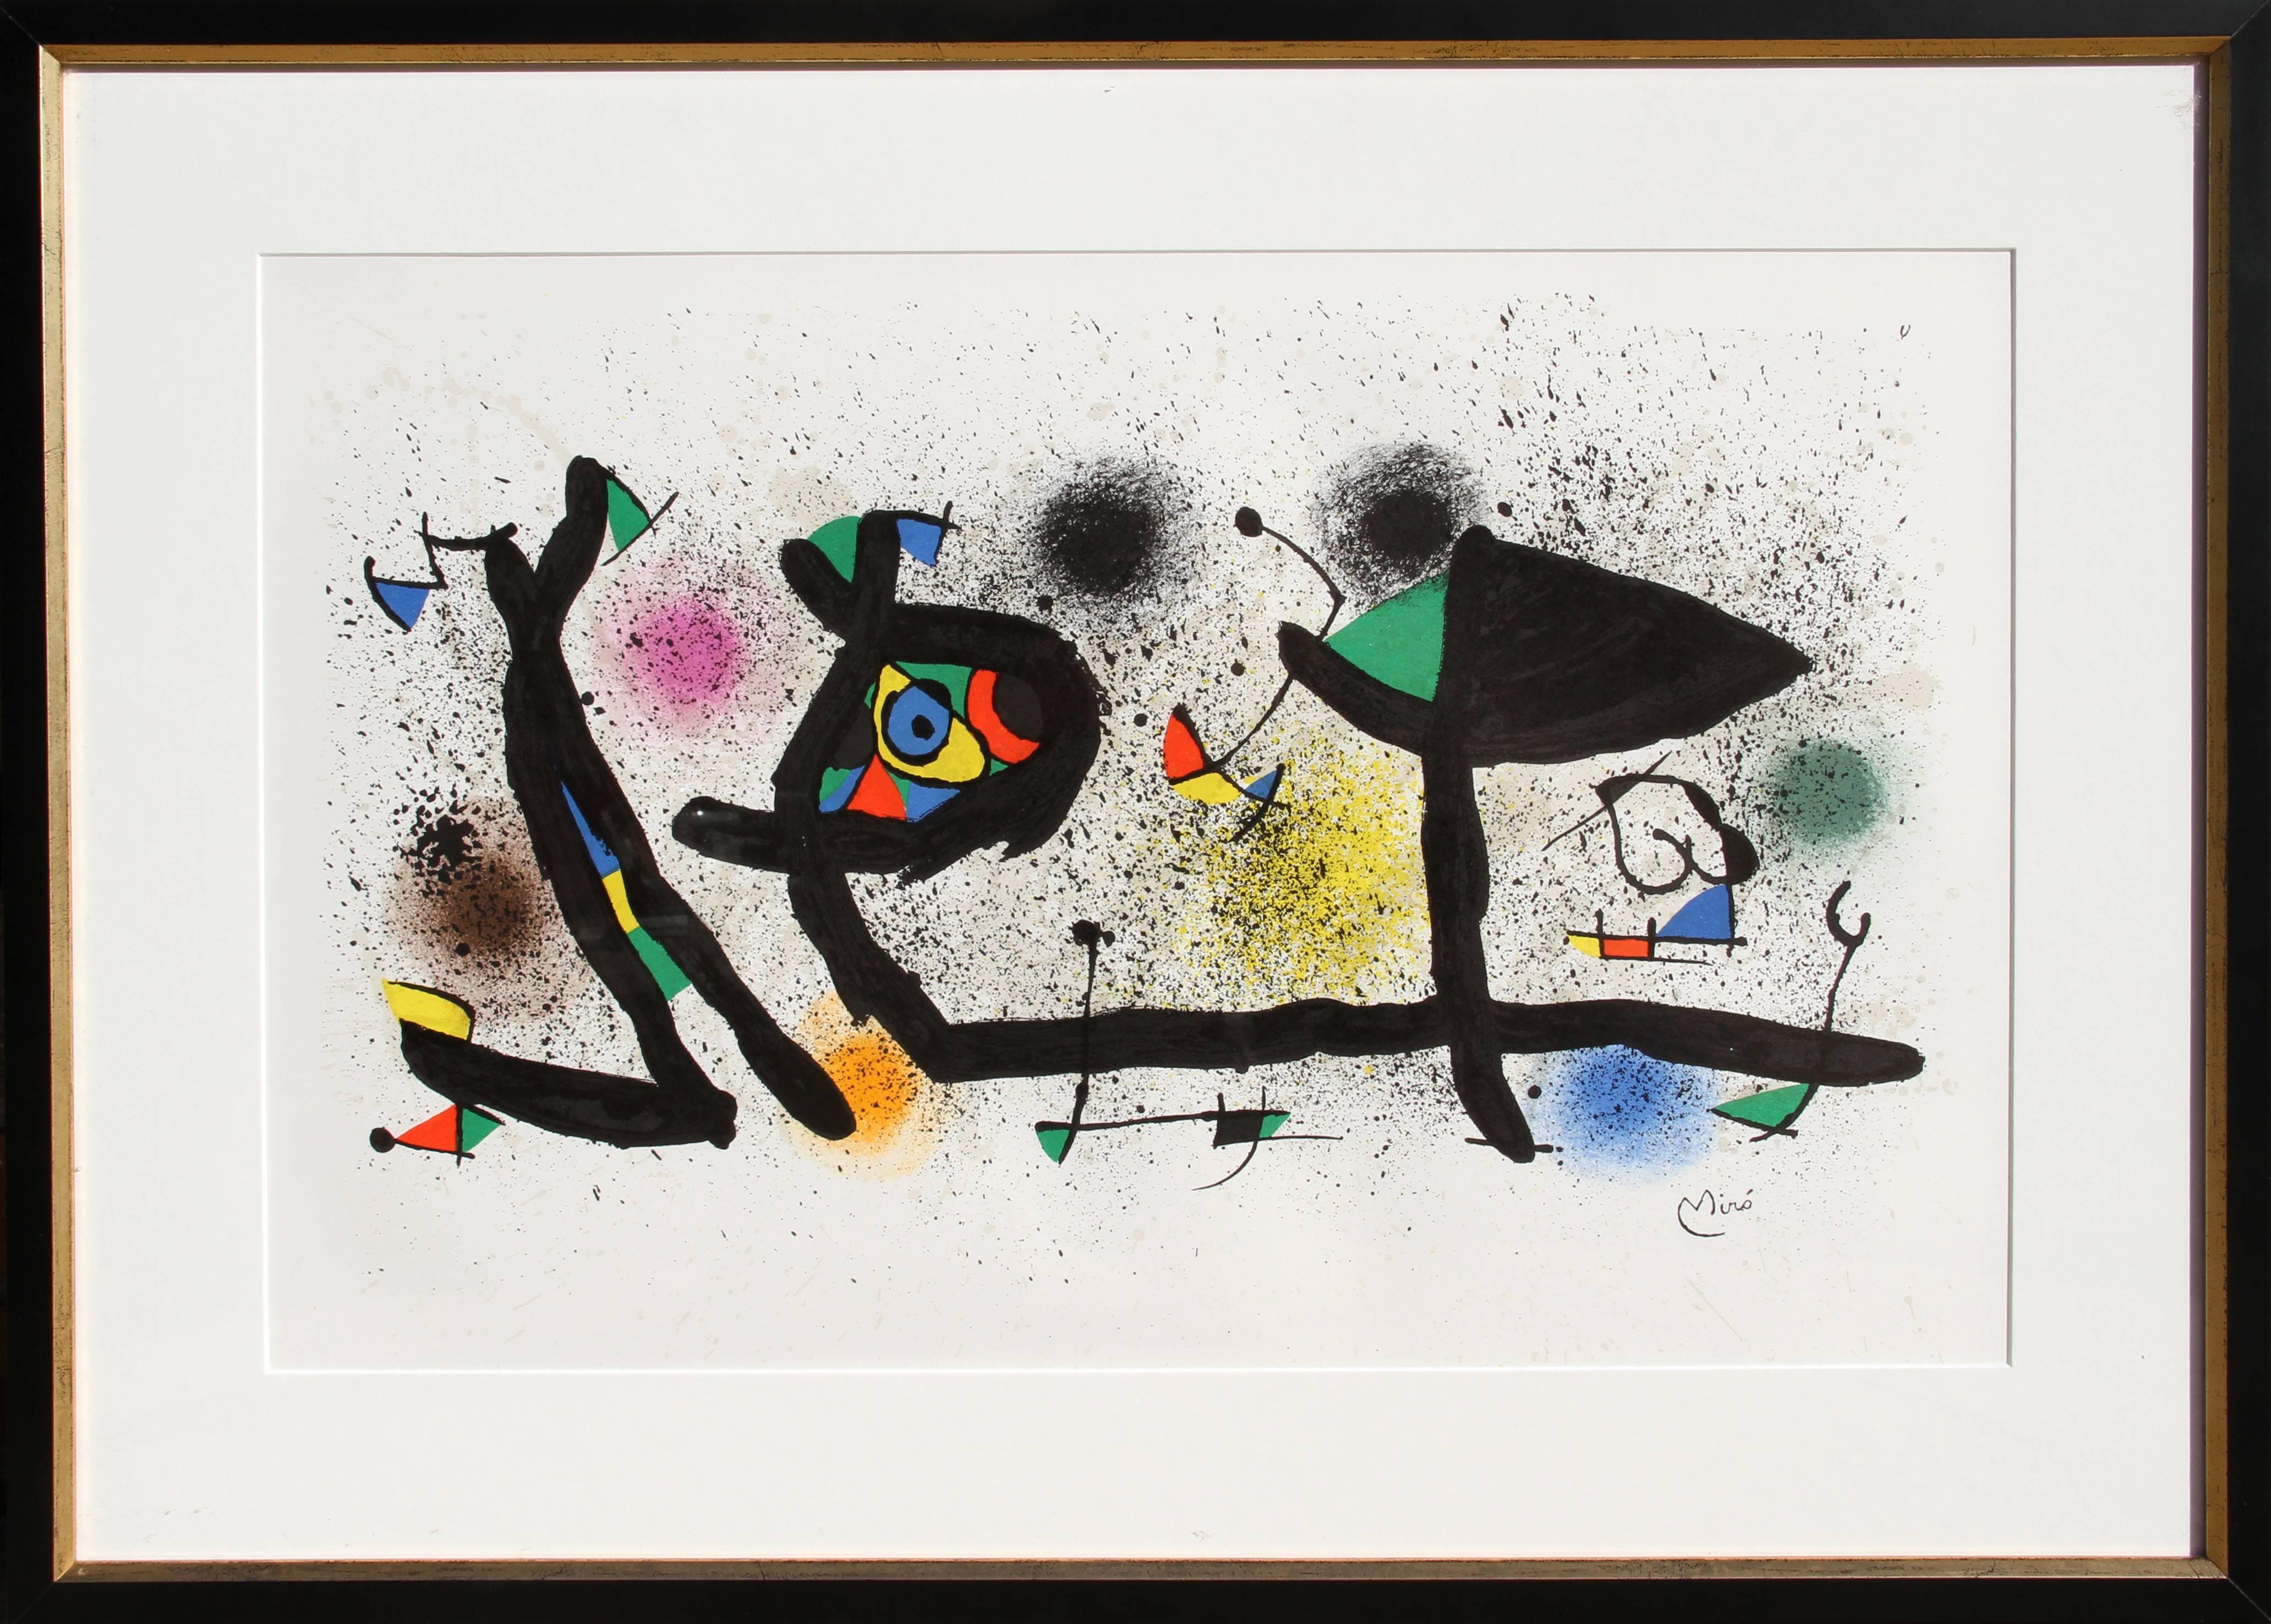 Abstract Print Joan Miró - Sculptures (M. 950), lithographie encadrée de Joan Miro